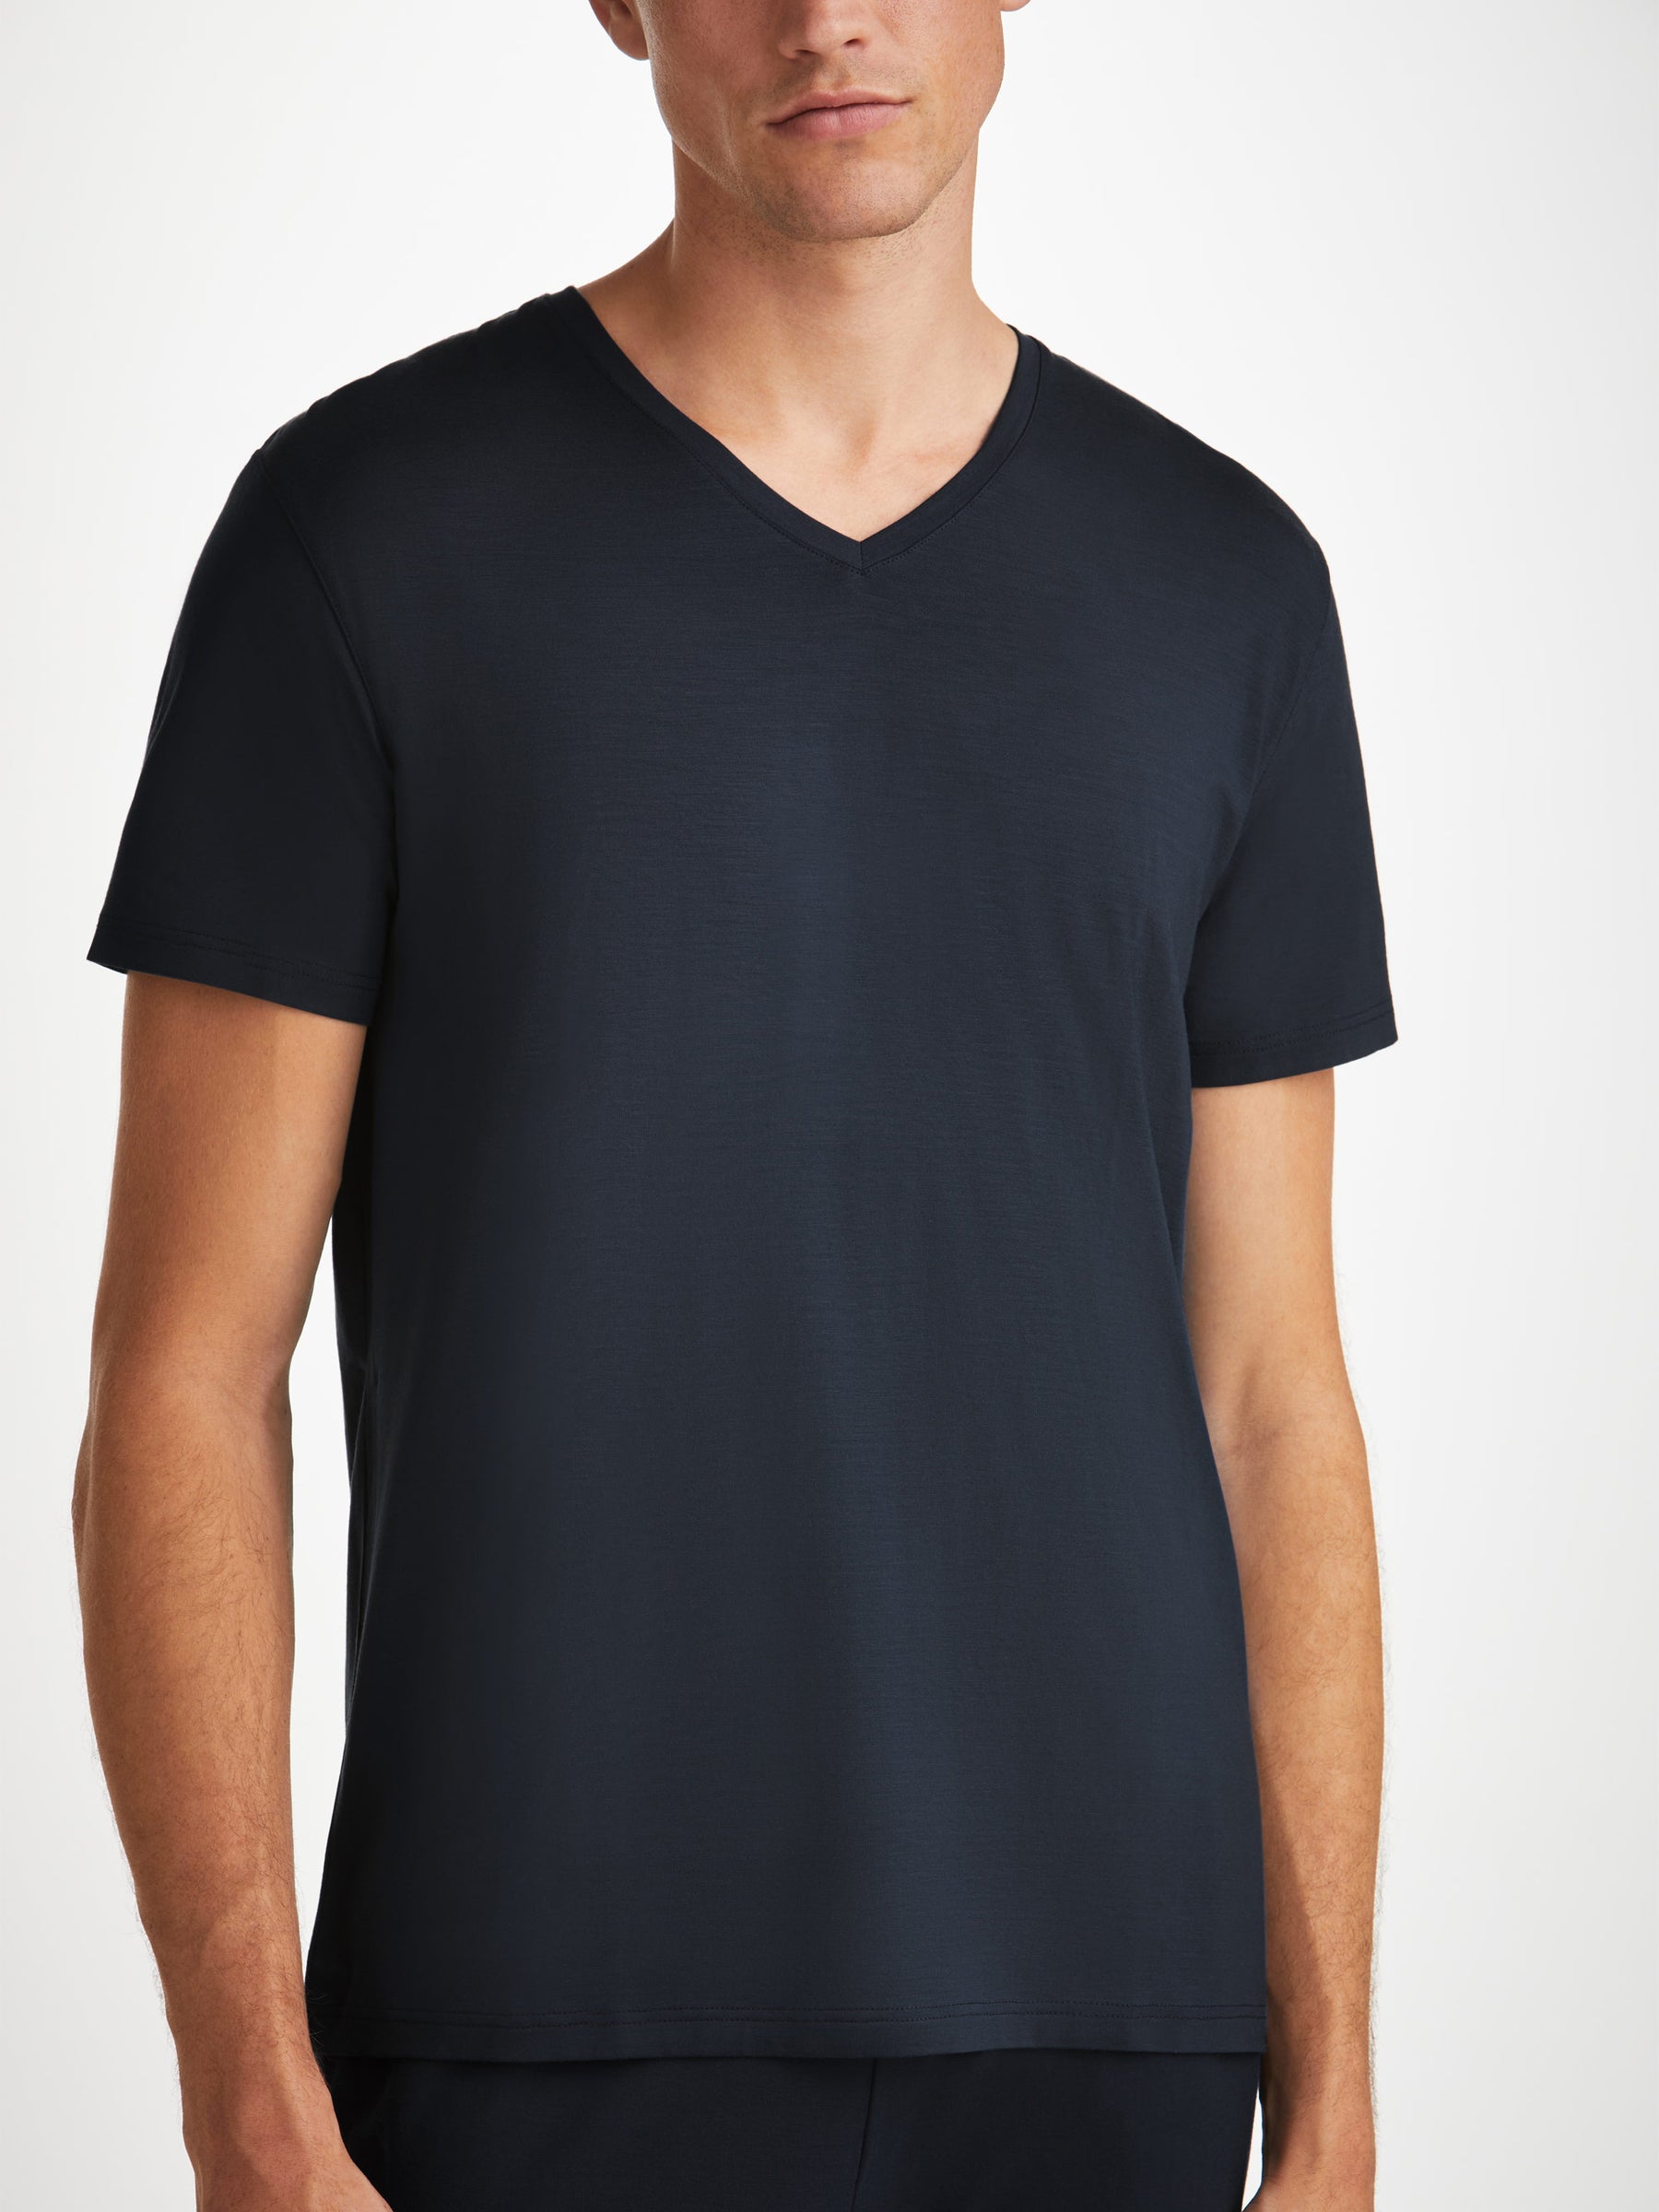 Men's V-Neck T-Shirt Basel Micro Modal Stretch Navy